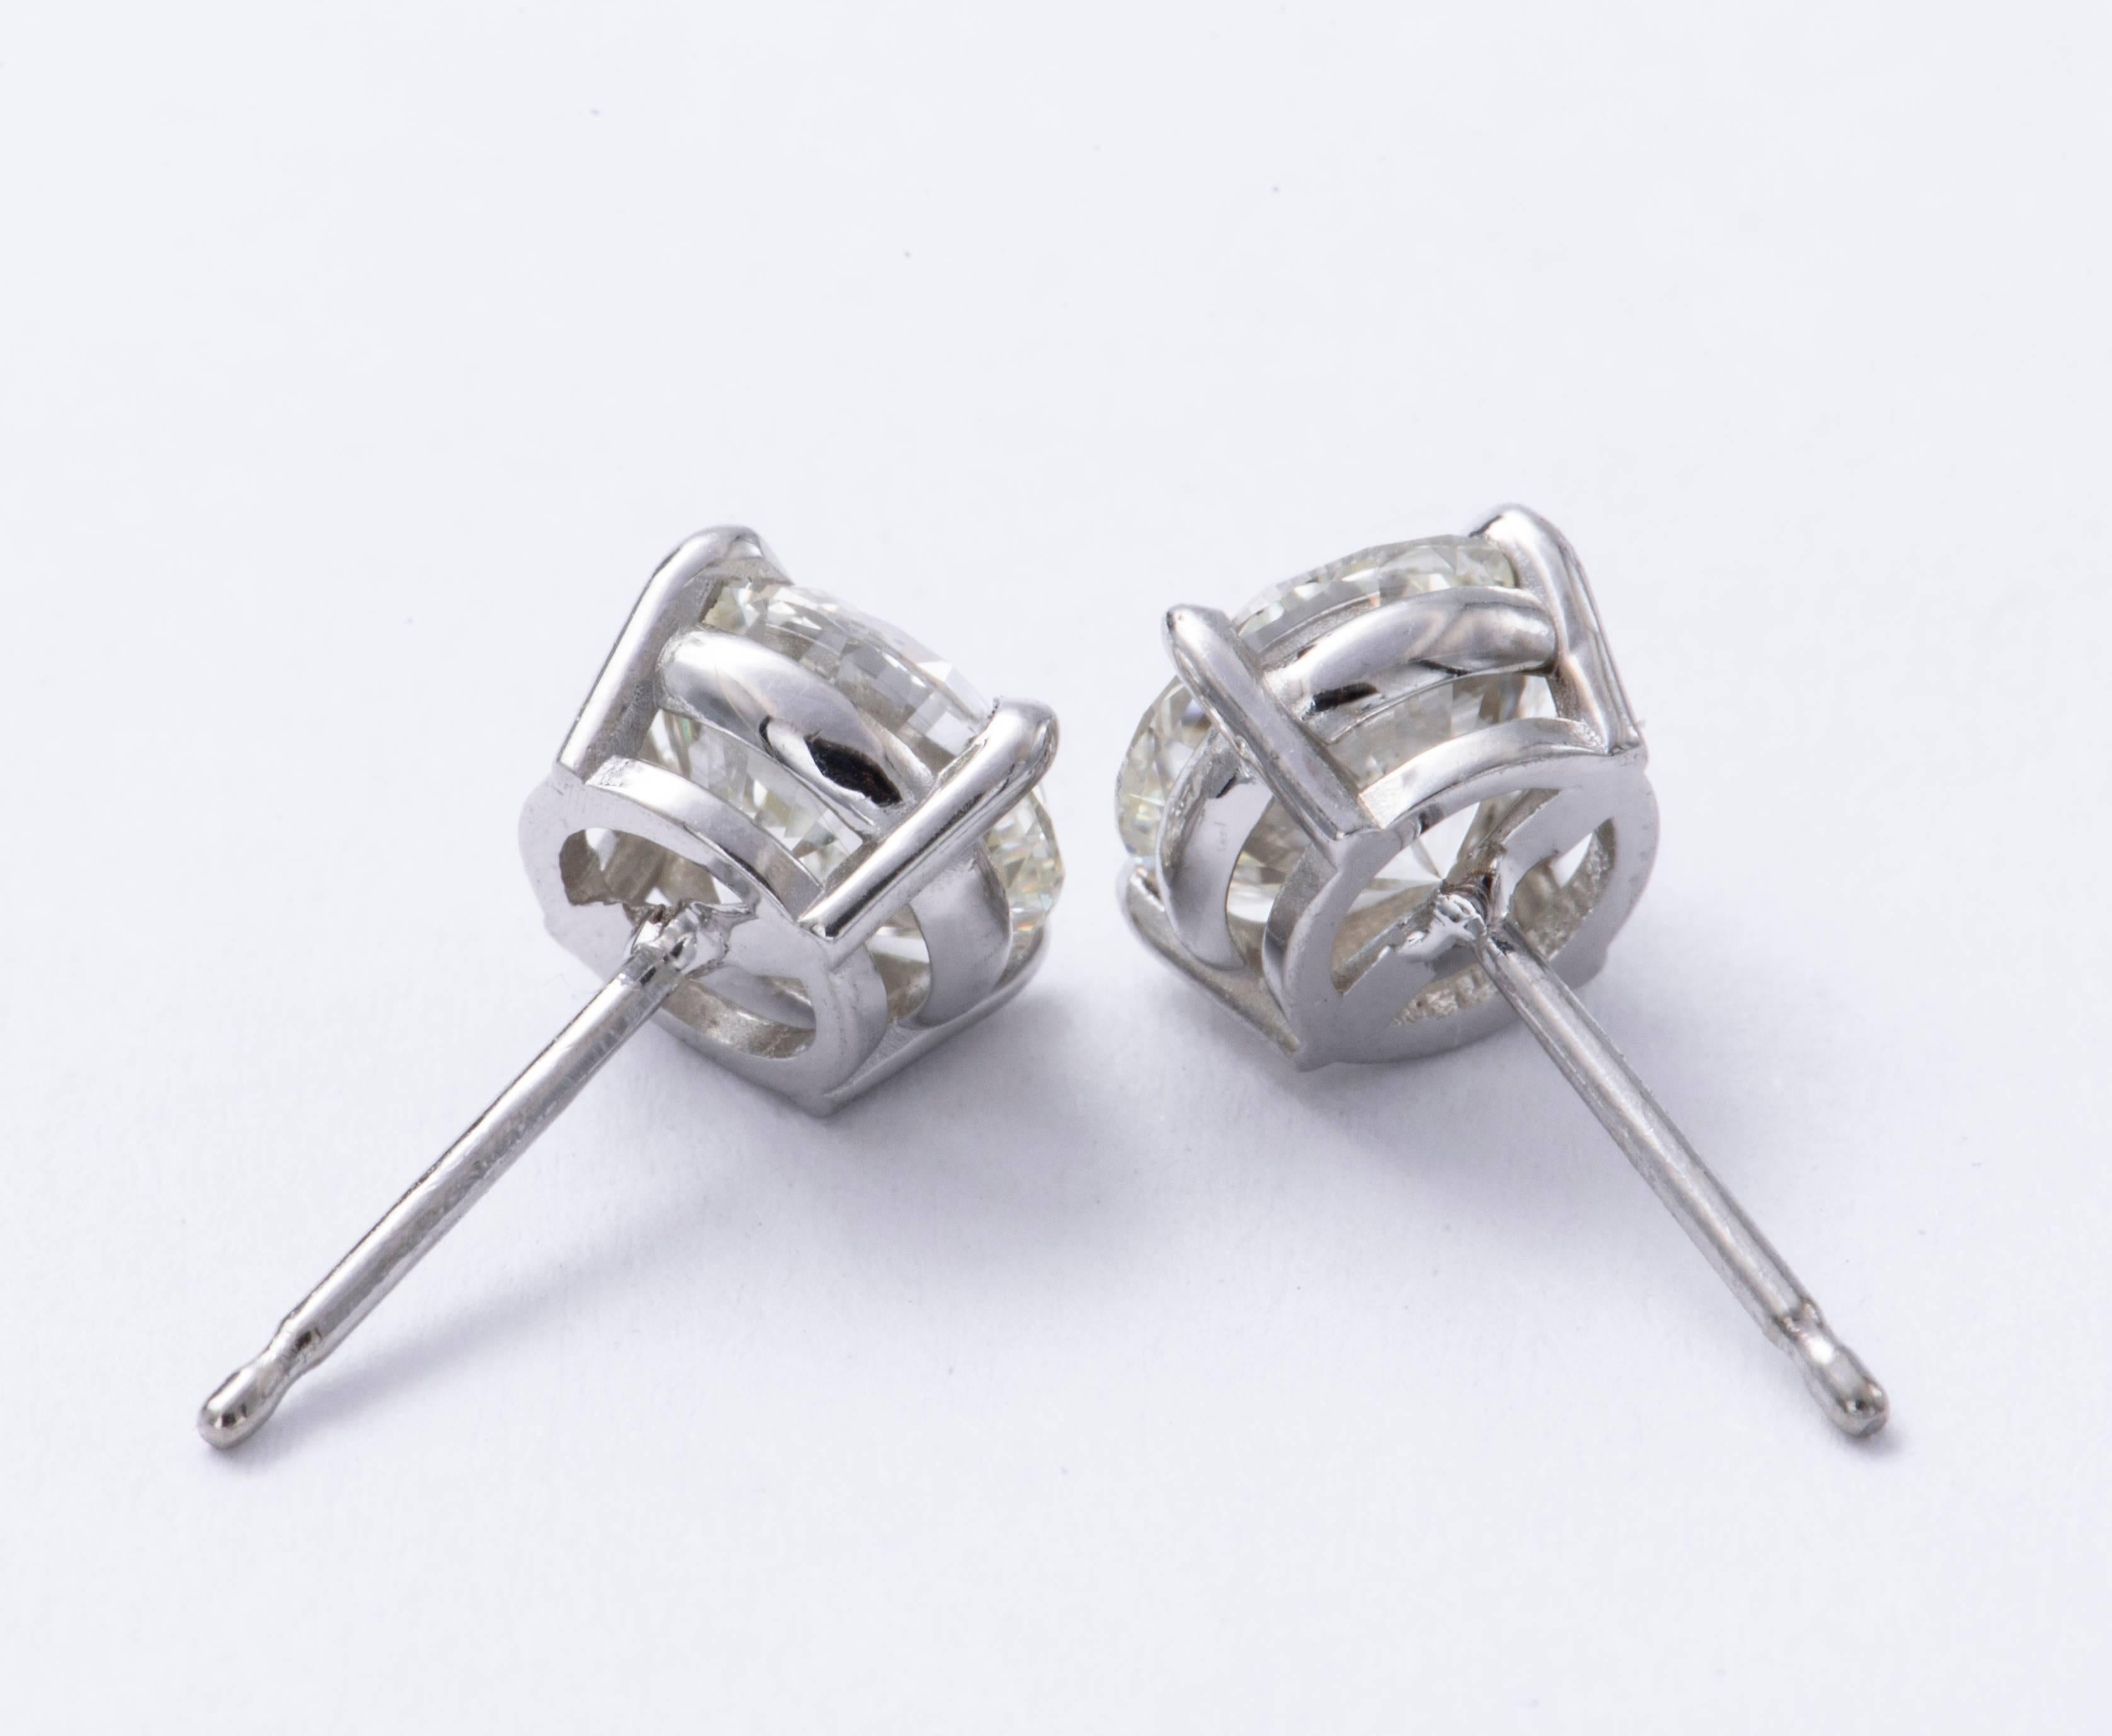 6 carat diamond earrings price